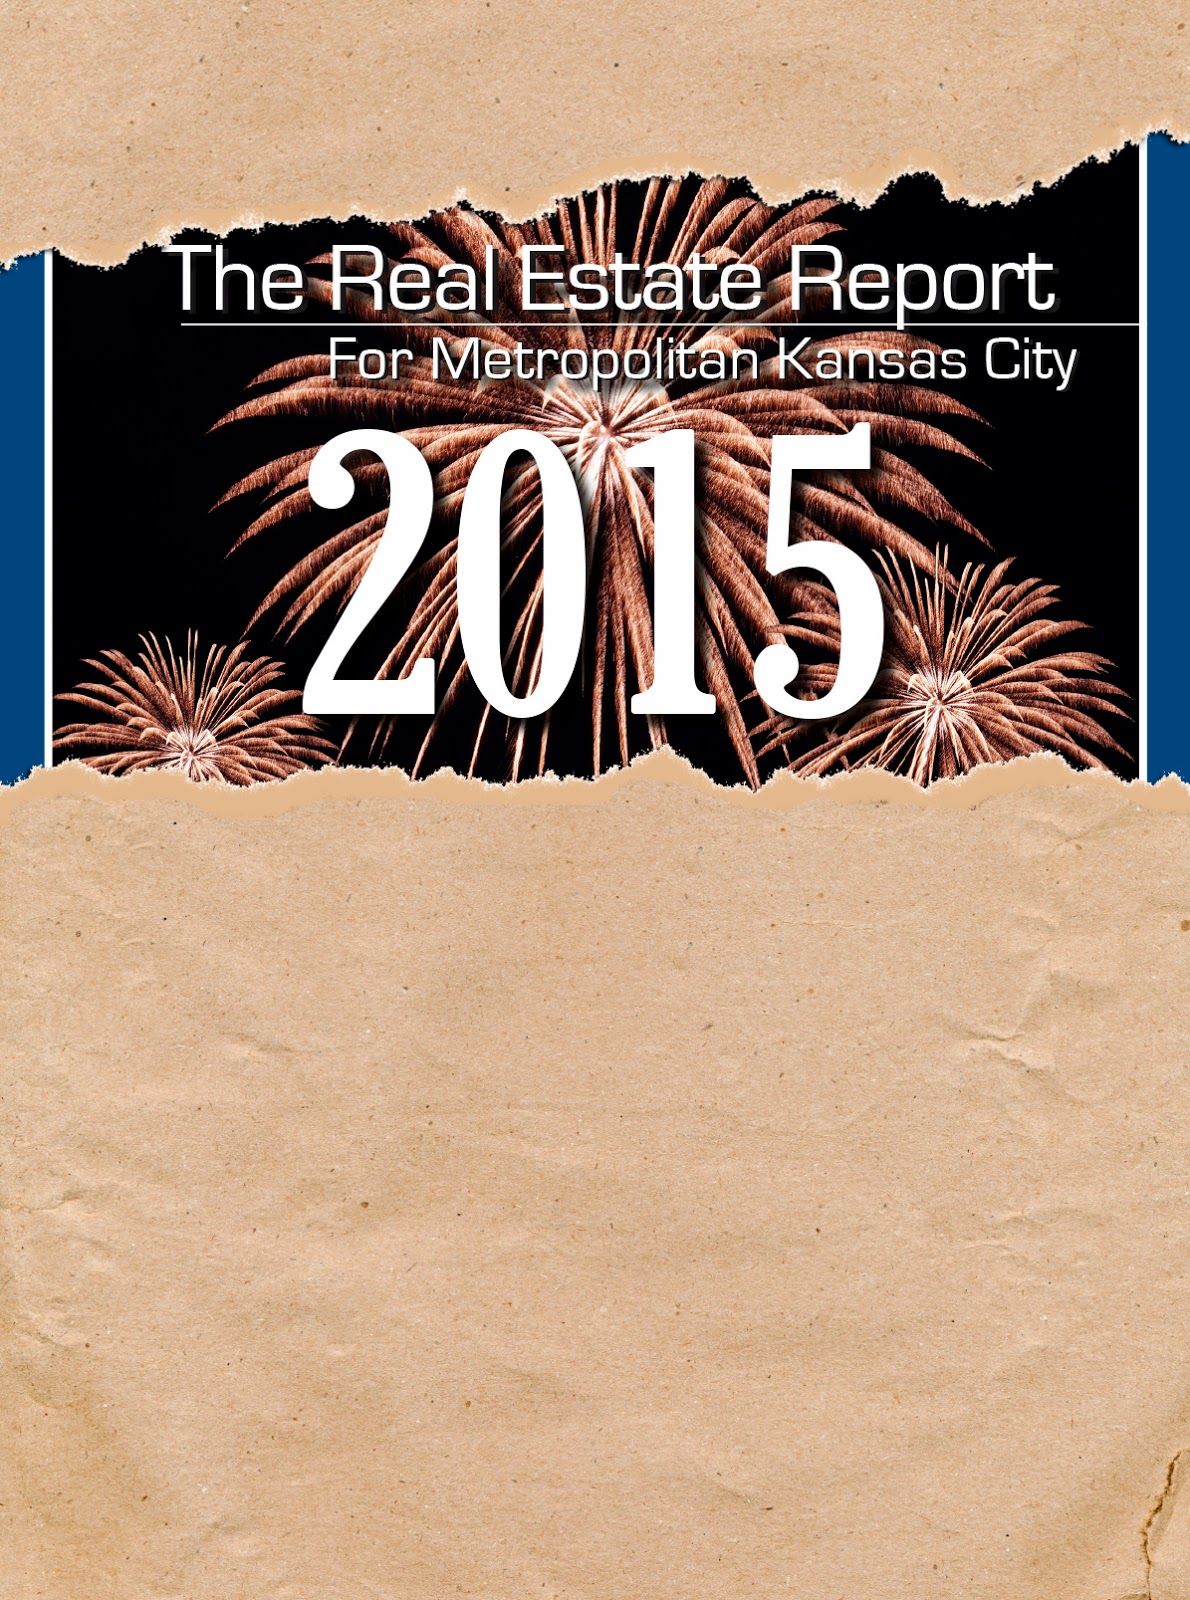 Market Report 2015 Sneak Peak - Day 2 Downtown